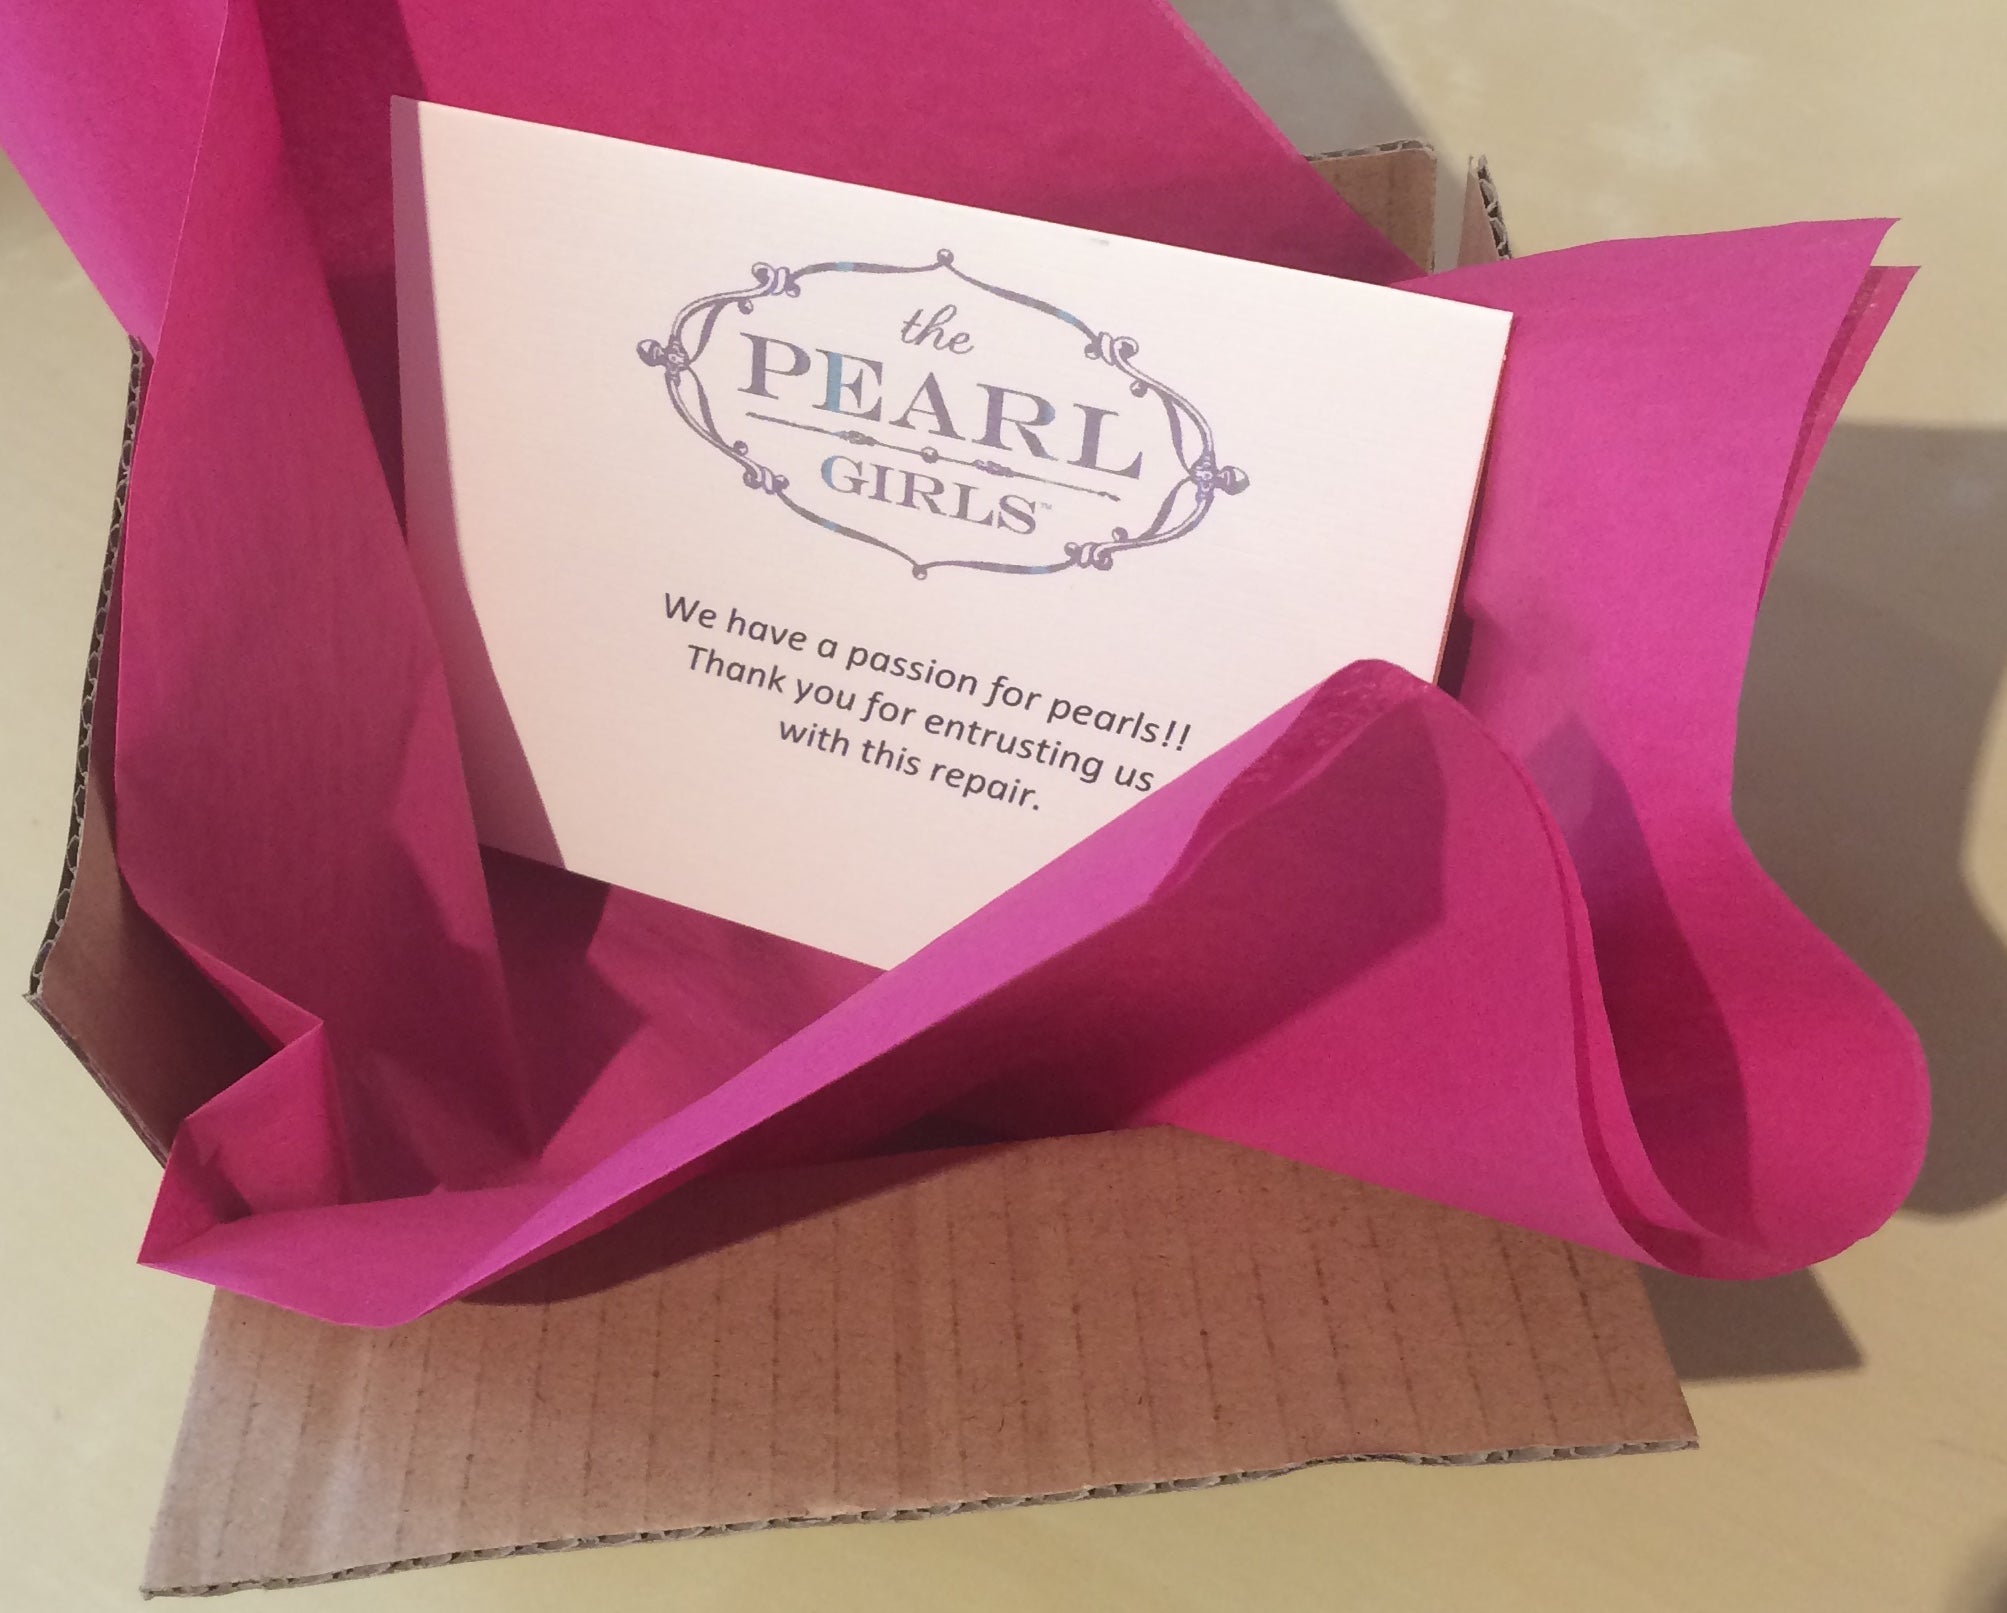 A Pearl Jewelry Repair Service - Jewelry Return Kit - The Pearl Girls